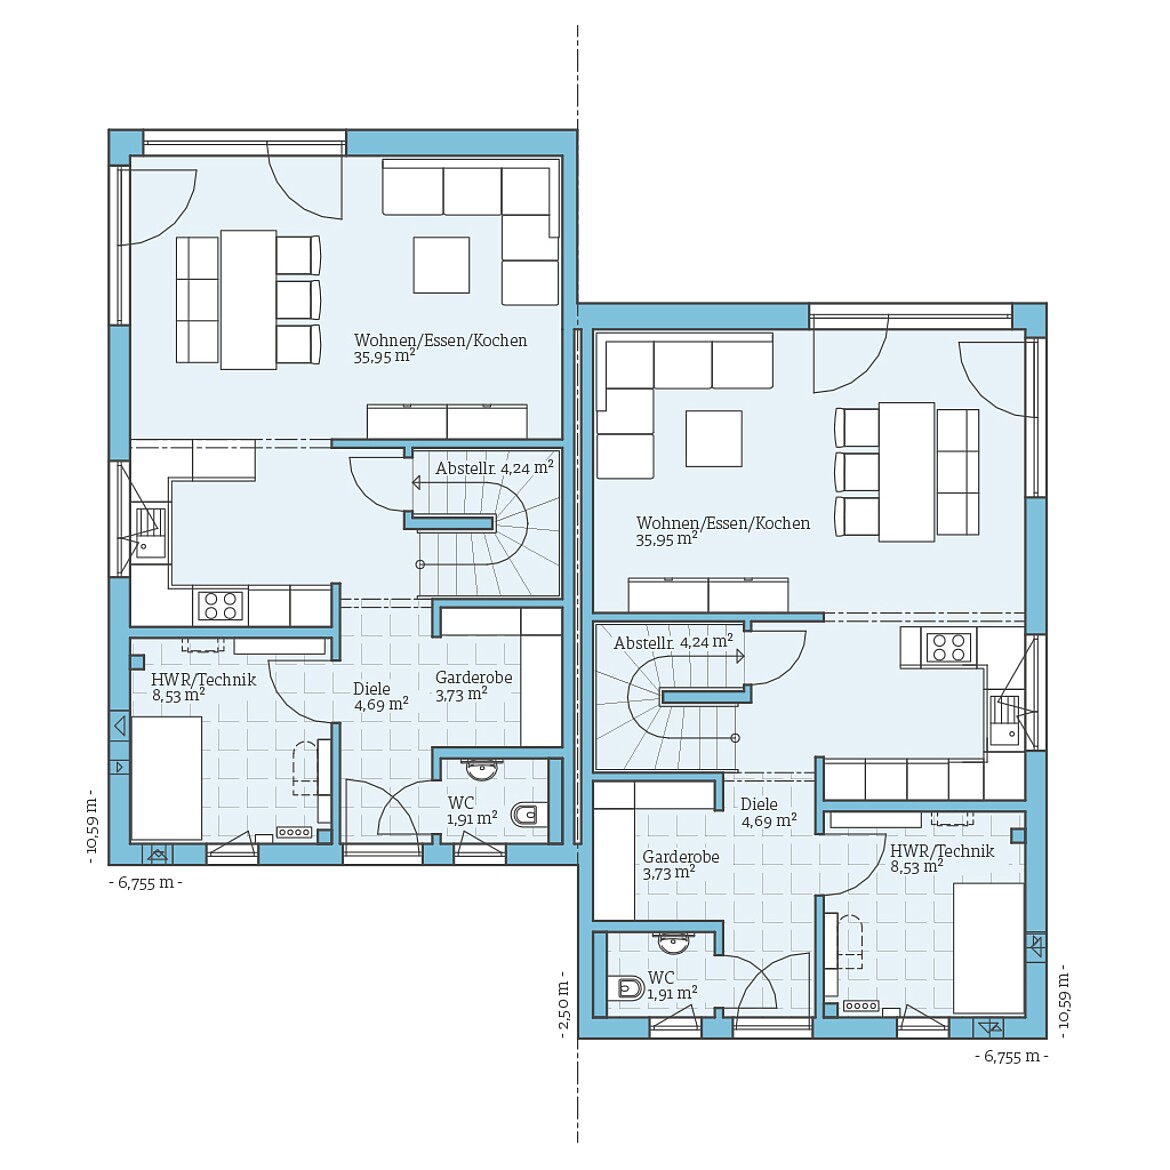 Prefabricated semi-detached house 164: Ground floor plan